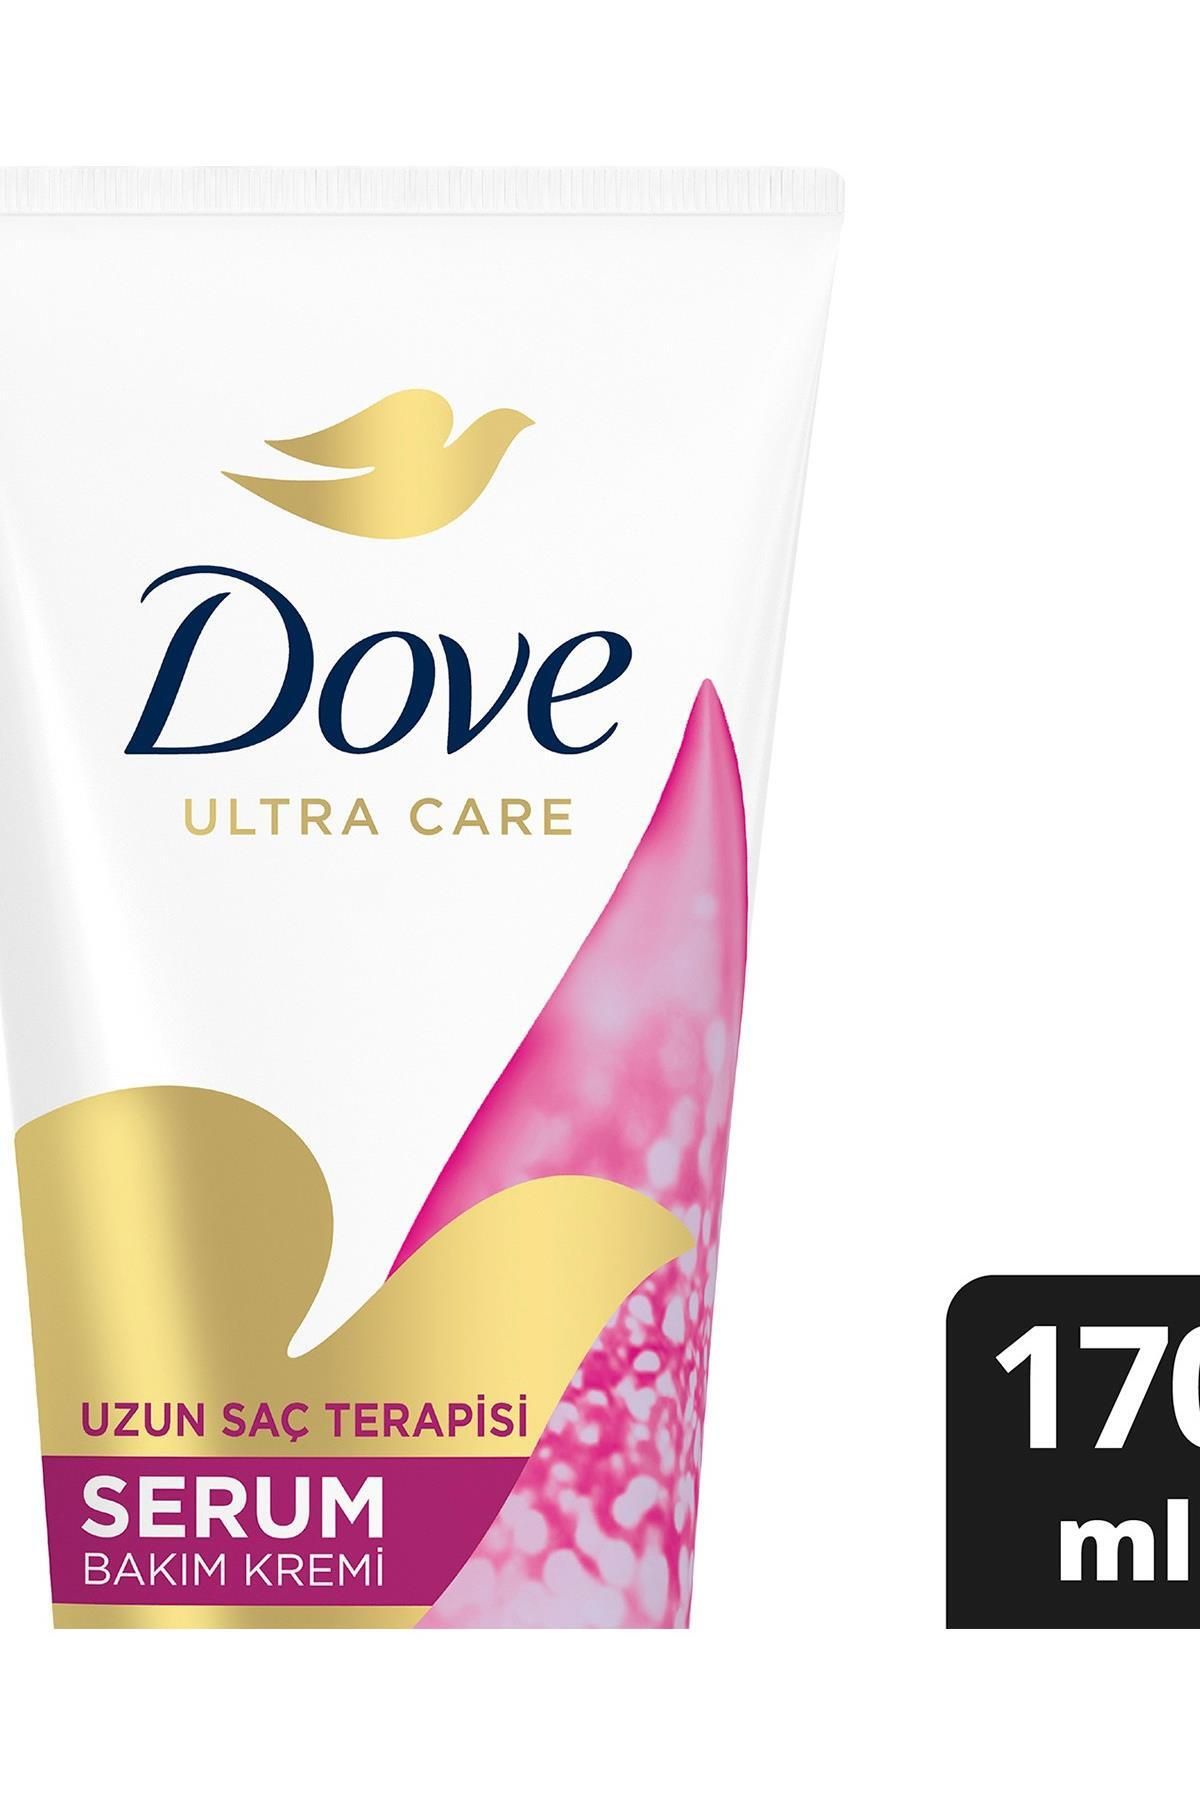 Dove Ultra Care 1 Minute Serum Saç Bakım Kremi Uzun Saç Terapisi 170 Ml